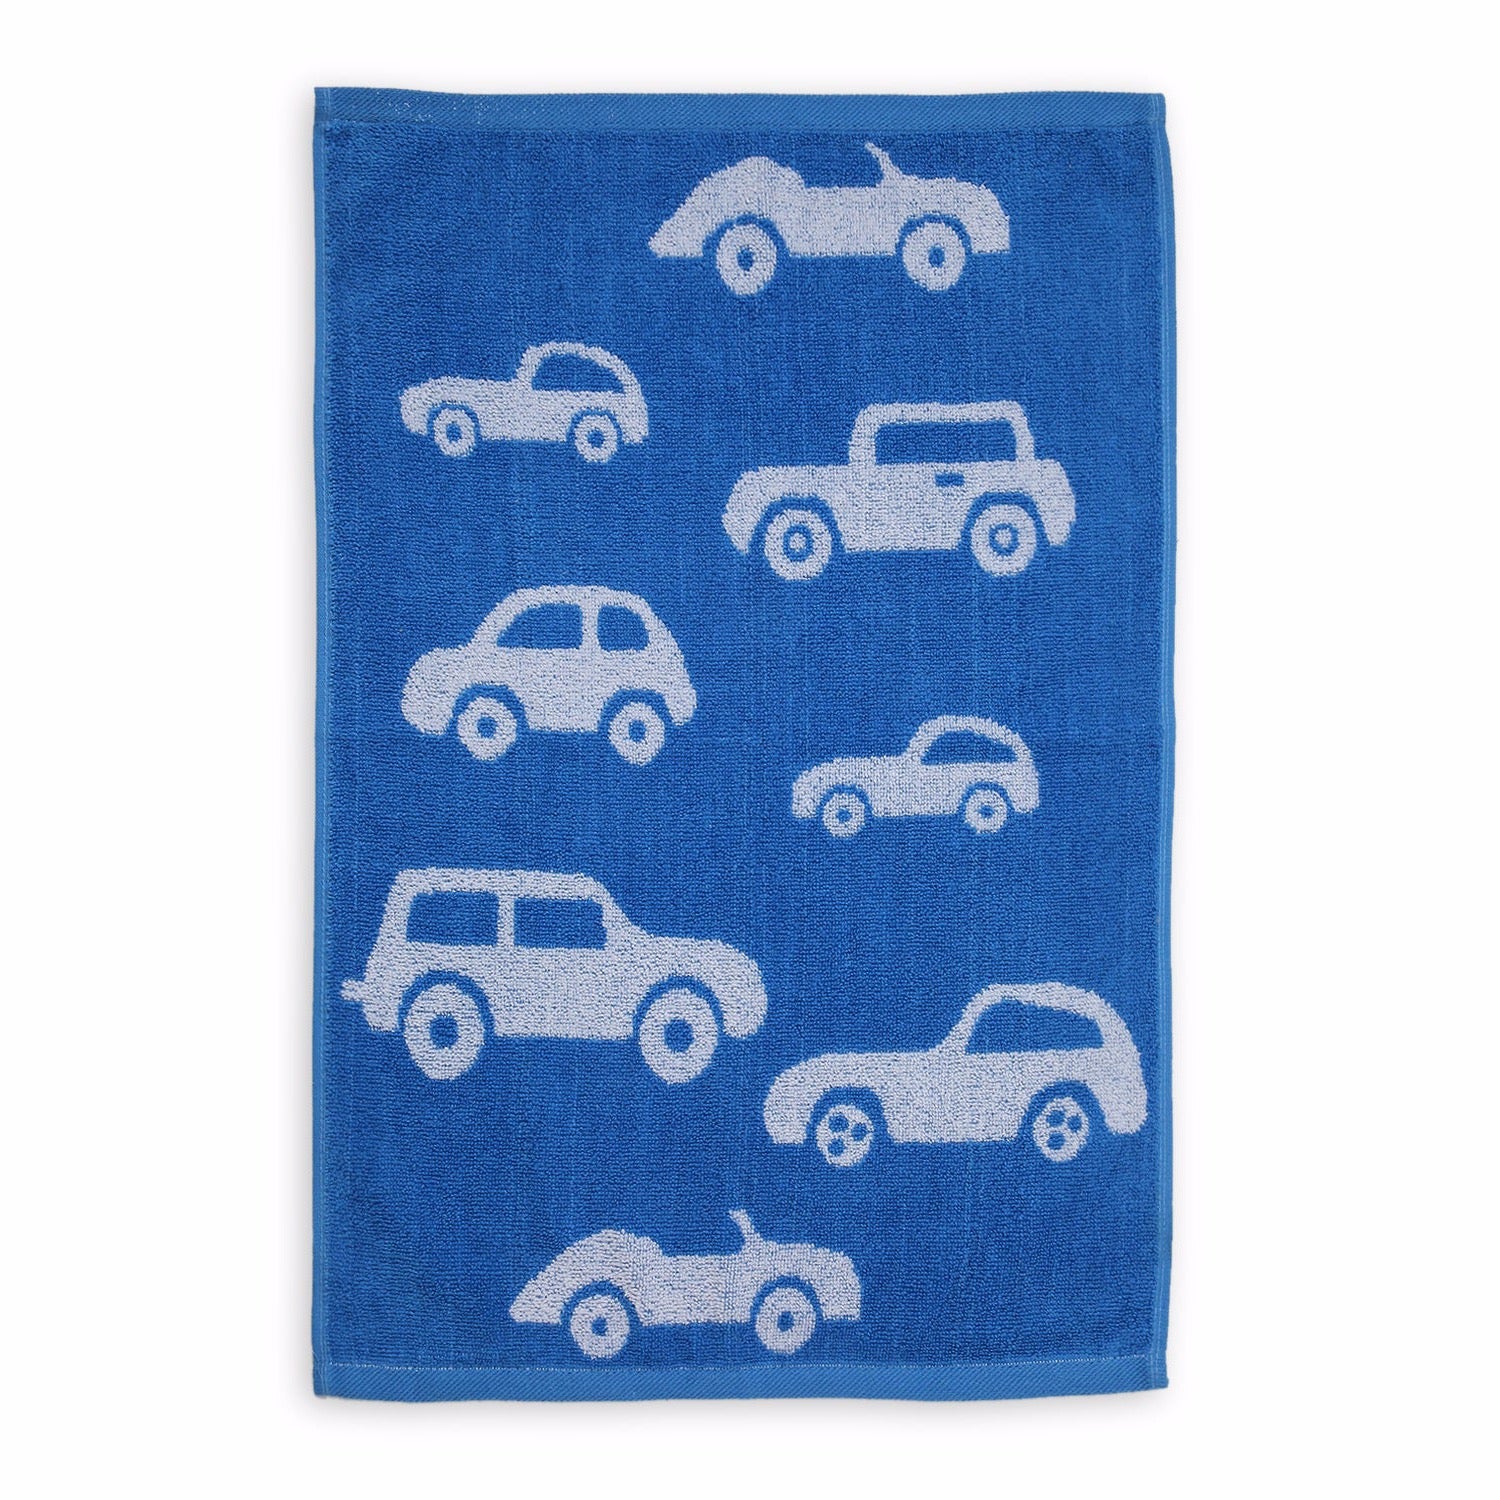 Blue Car Hand Towel